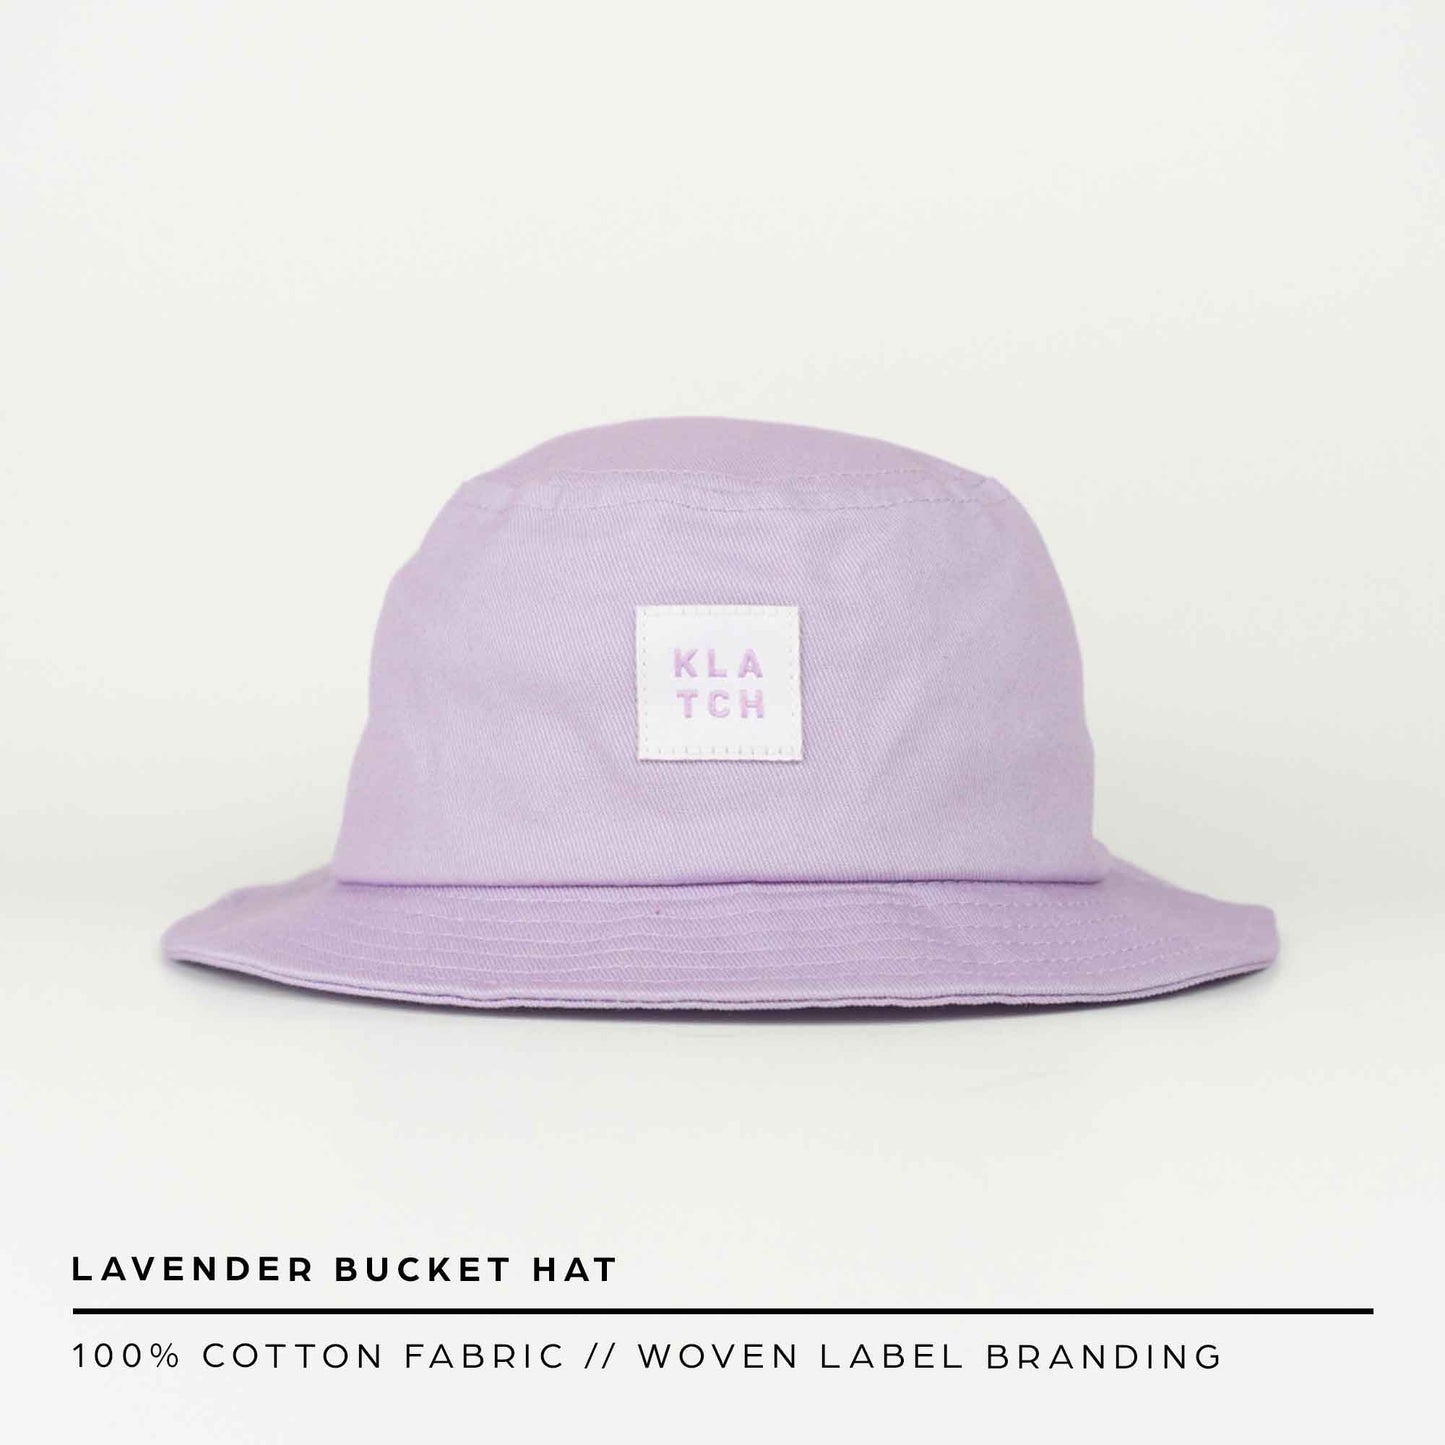 boonie style bucket hat in lavender